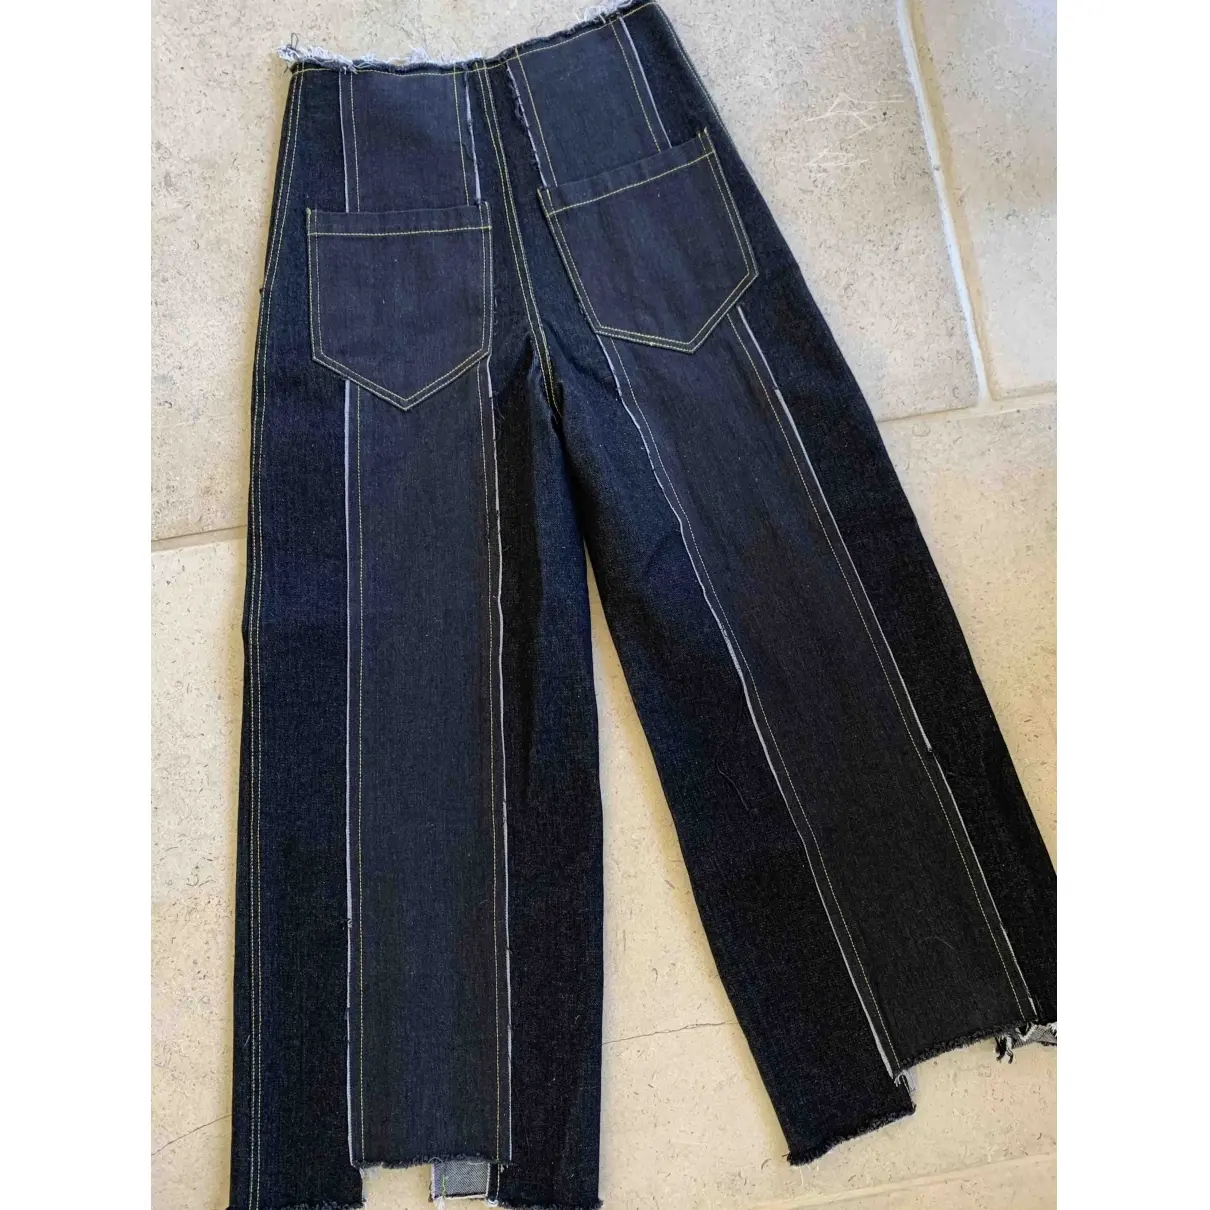 Rejina Pyo Straight jeans for sale